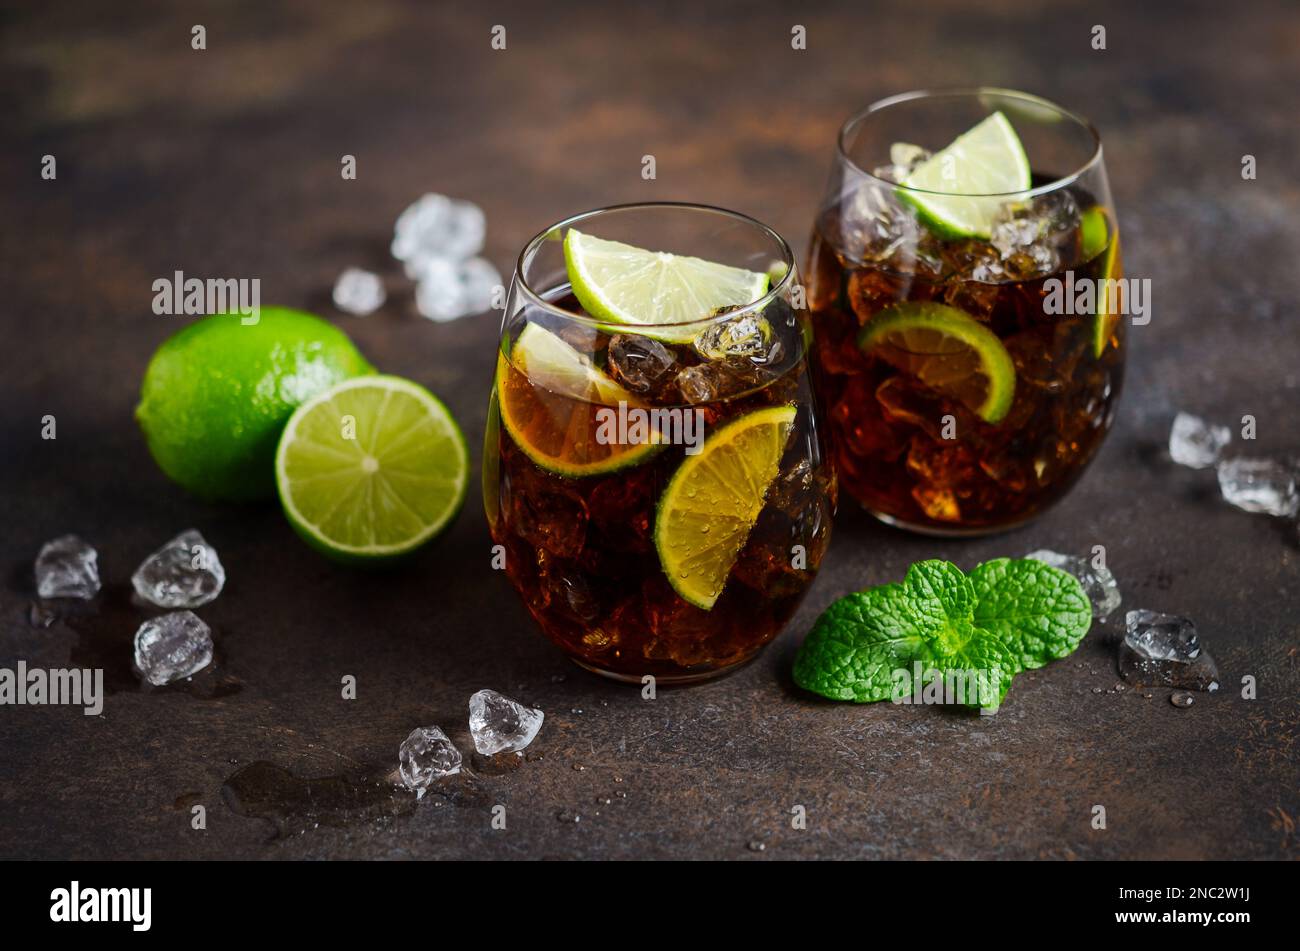 Cuba Libre mit braunem Rum, Cola und Limette. Cuba Libre oder Long Island Cocktail. Stockfoto